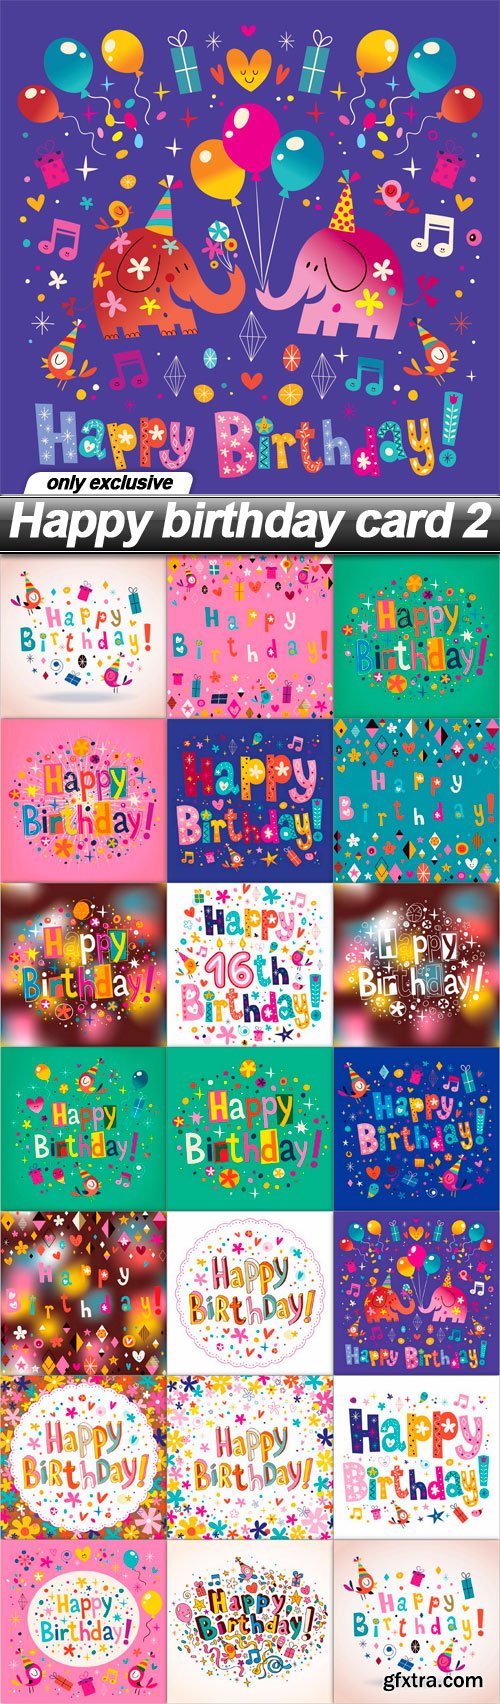 Happy birthday card 2 - 20 EPS